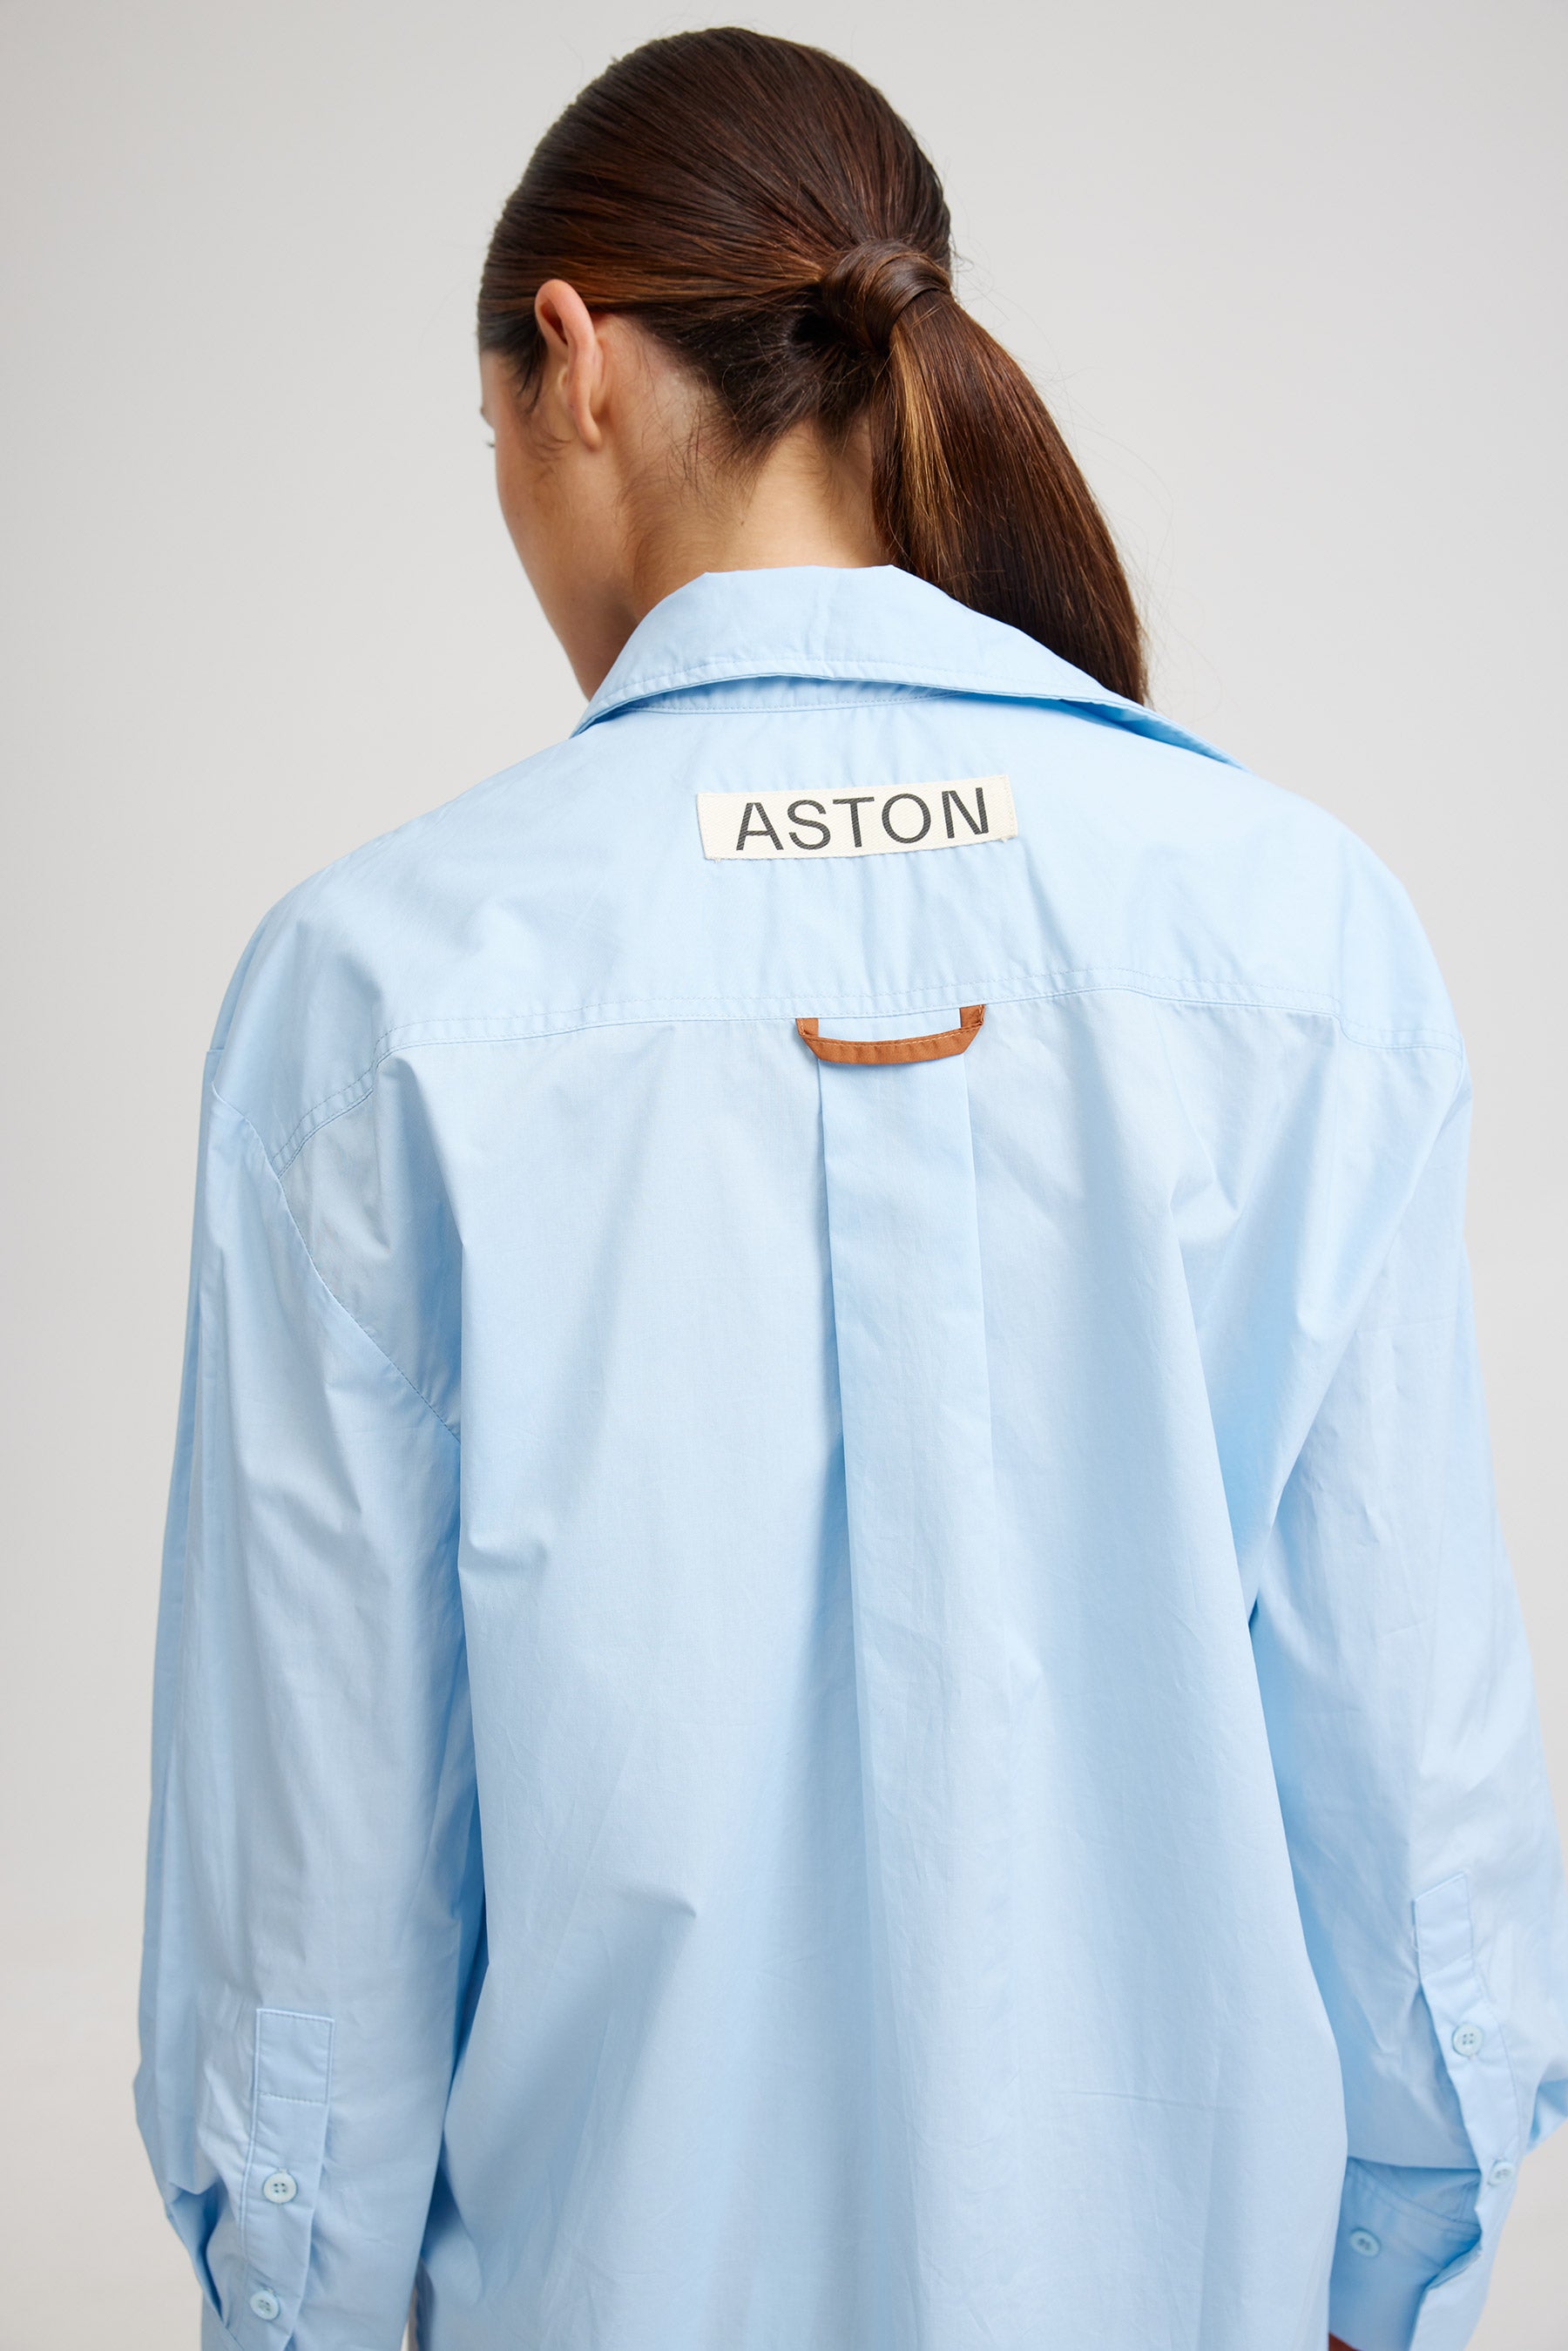 Aston Studio Buddy Shirt in Azure & Cigar Momera Goondiwindi